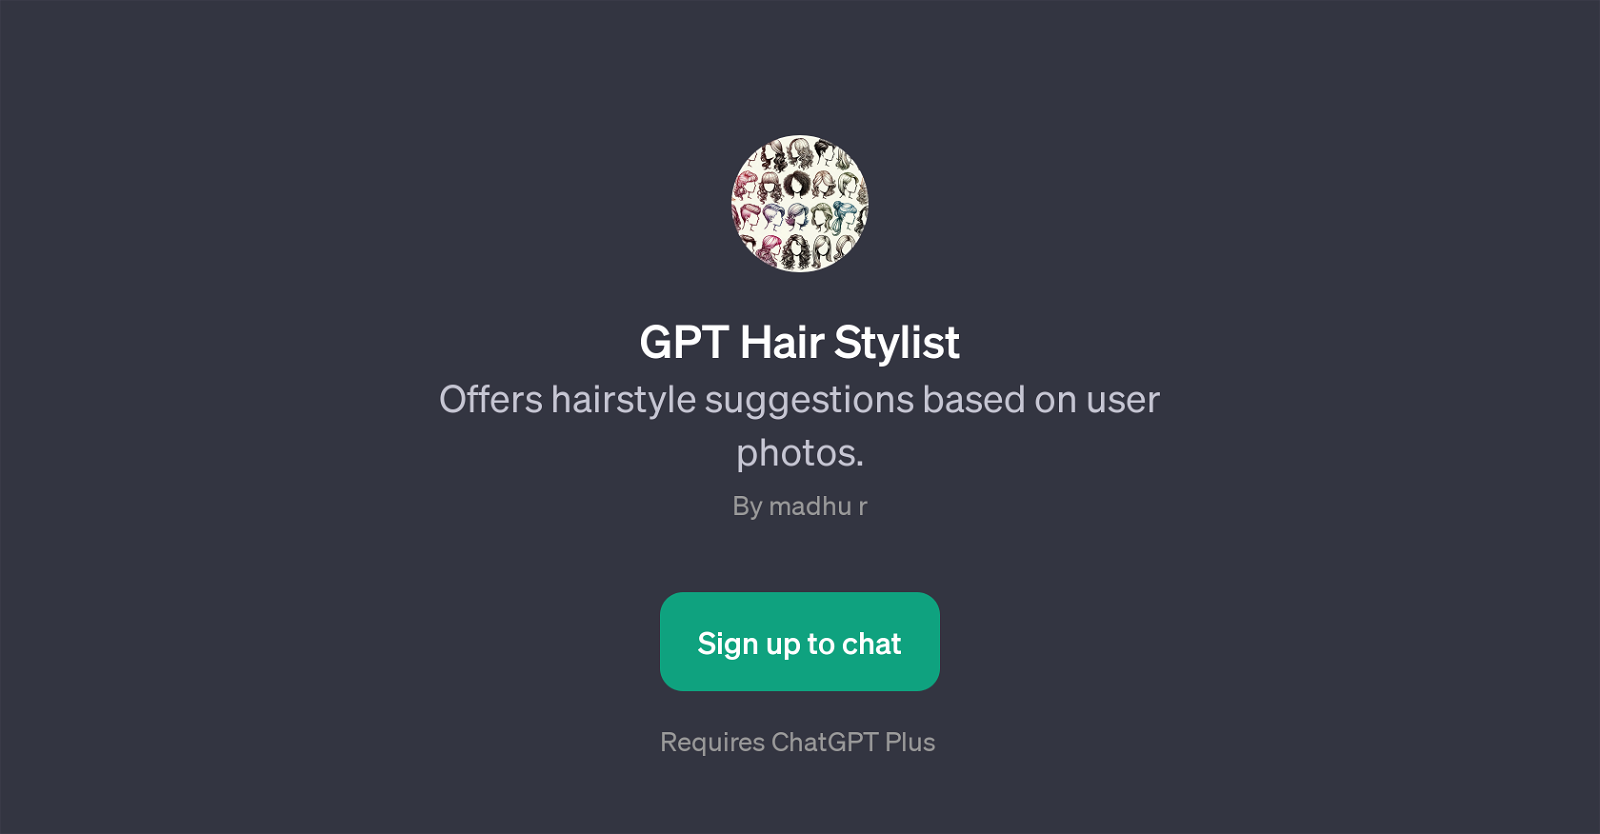 GPT Hair Stylist website